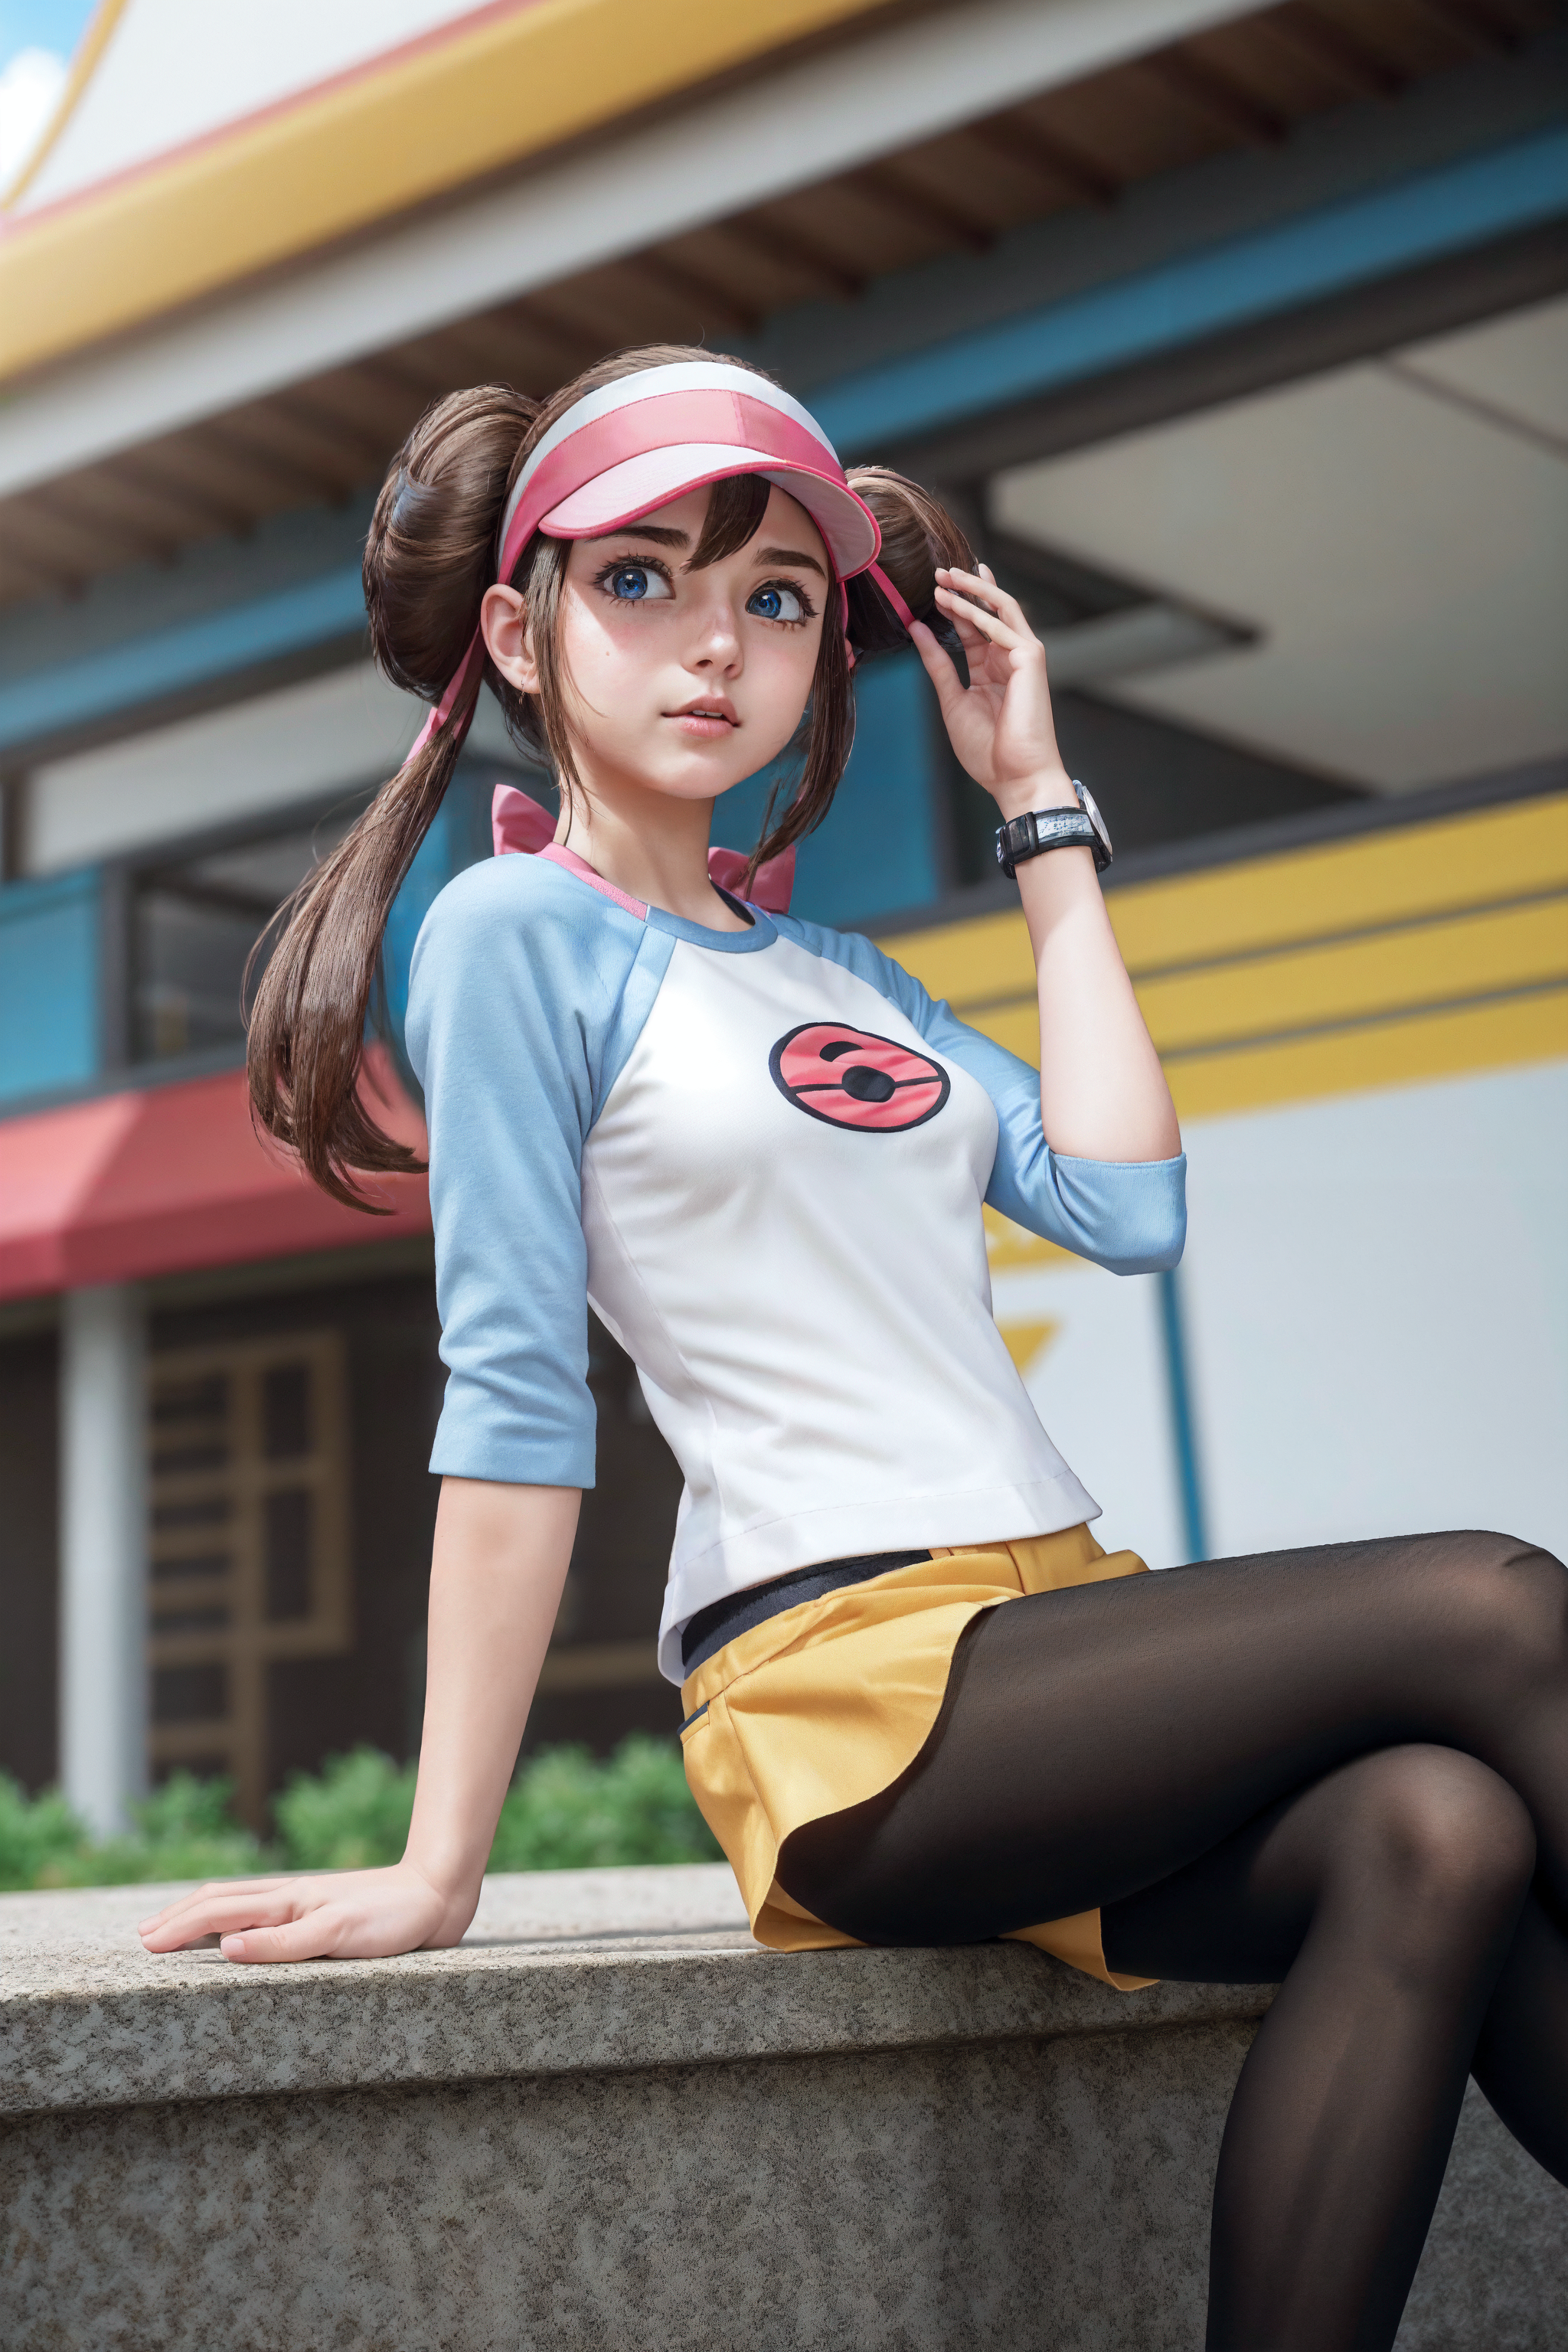 Rosa メイ / Pokemon image by piratekitty